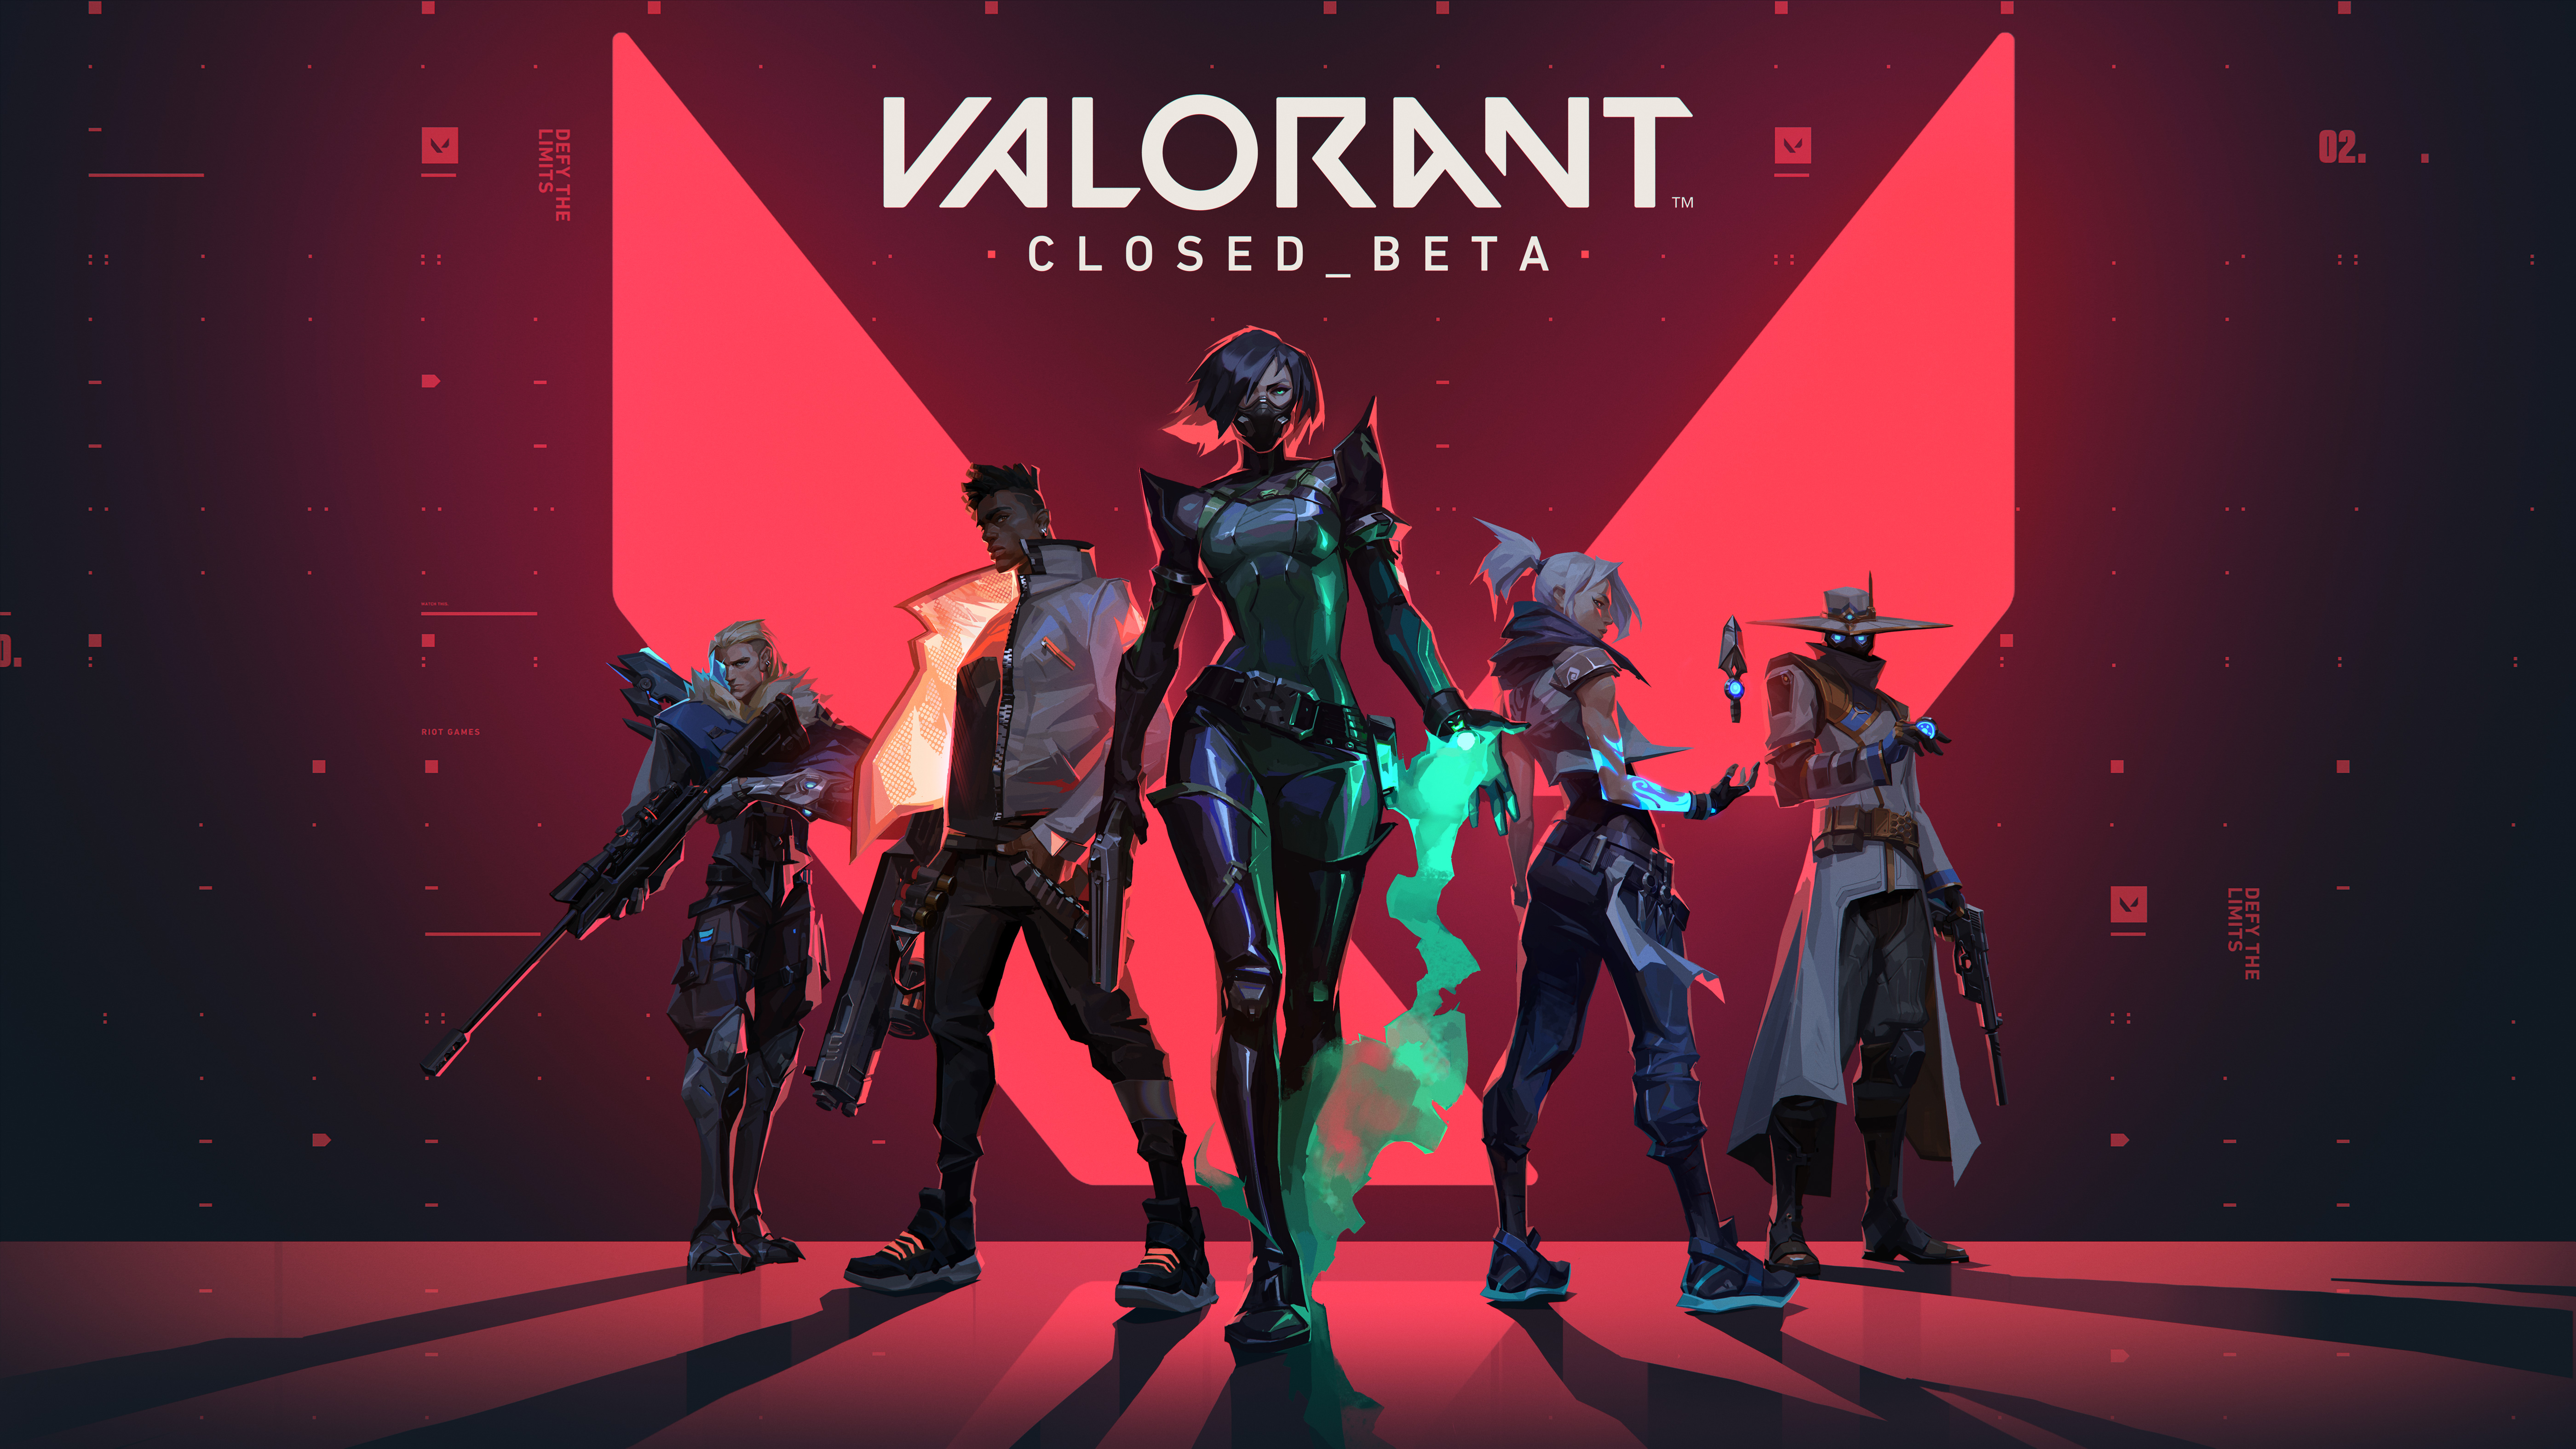 Valorant Closed Beta logo and characters.